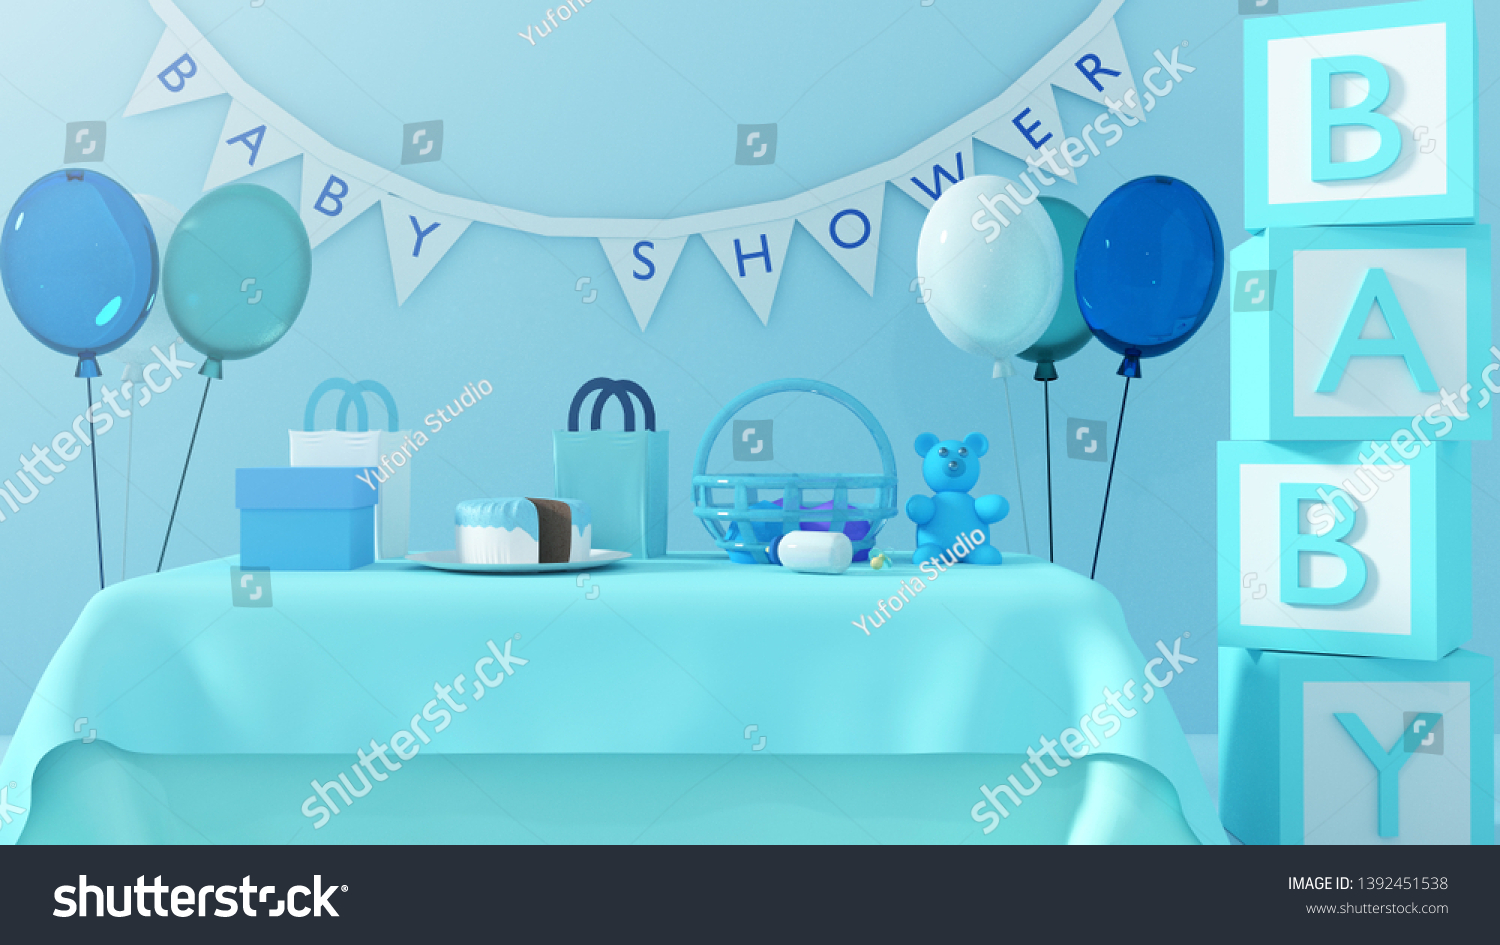 3d Illustration Baby Shower Decorations Stock Illustration 1392451538